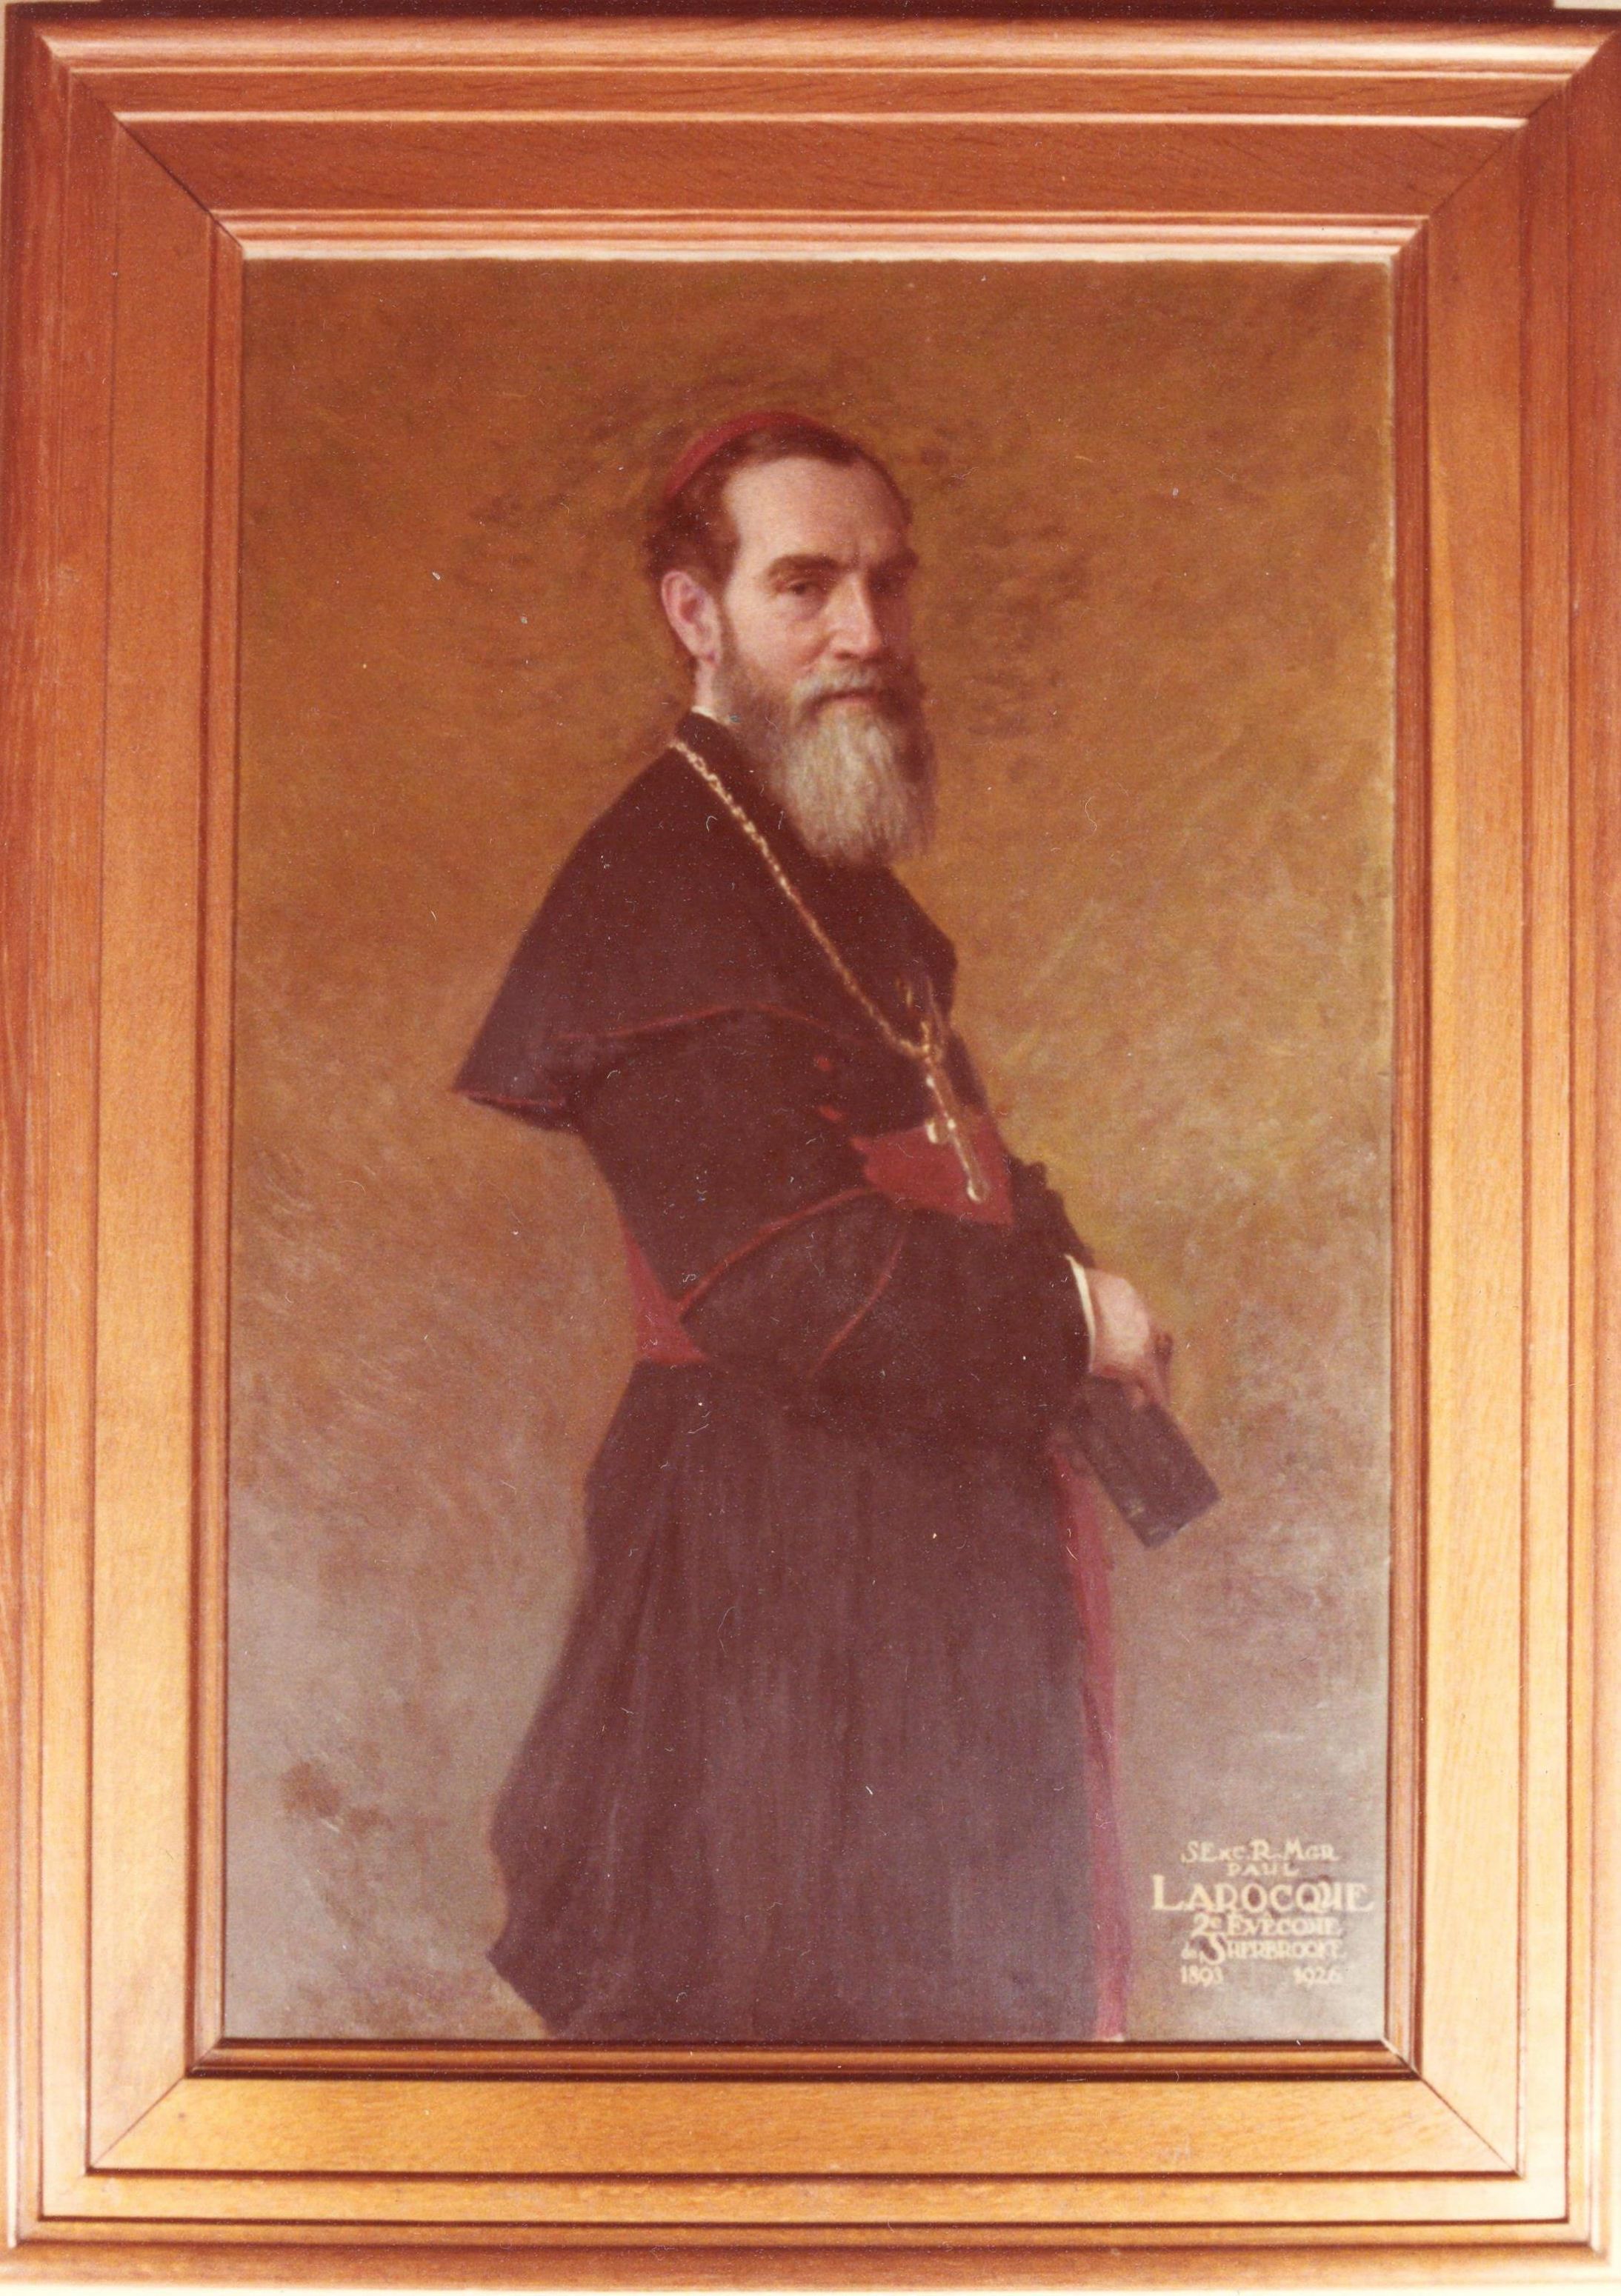 Mgr Paul LaRocque 1893-1926